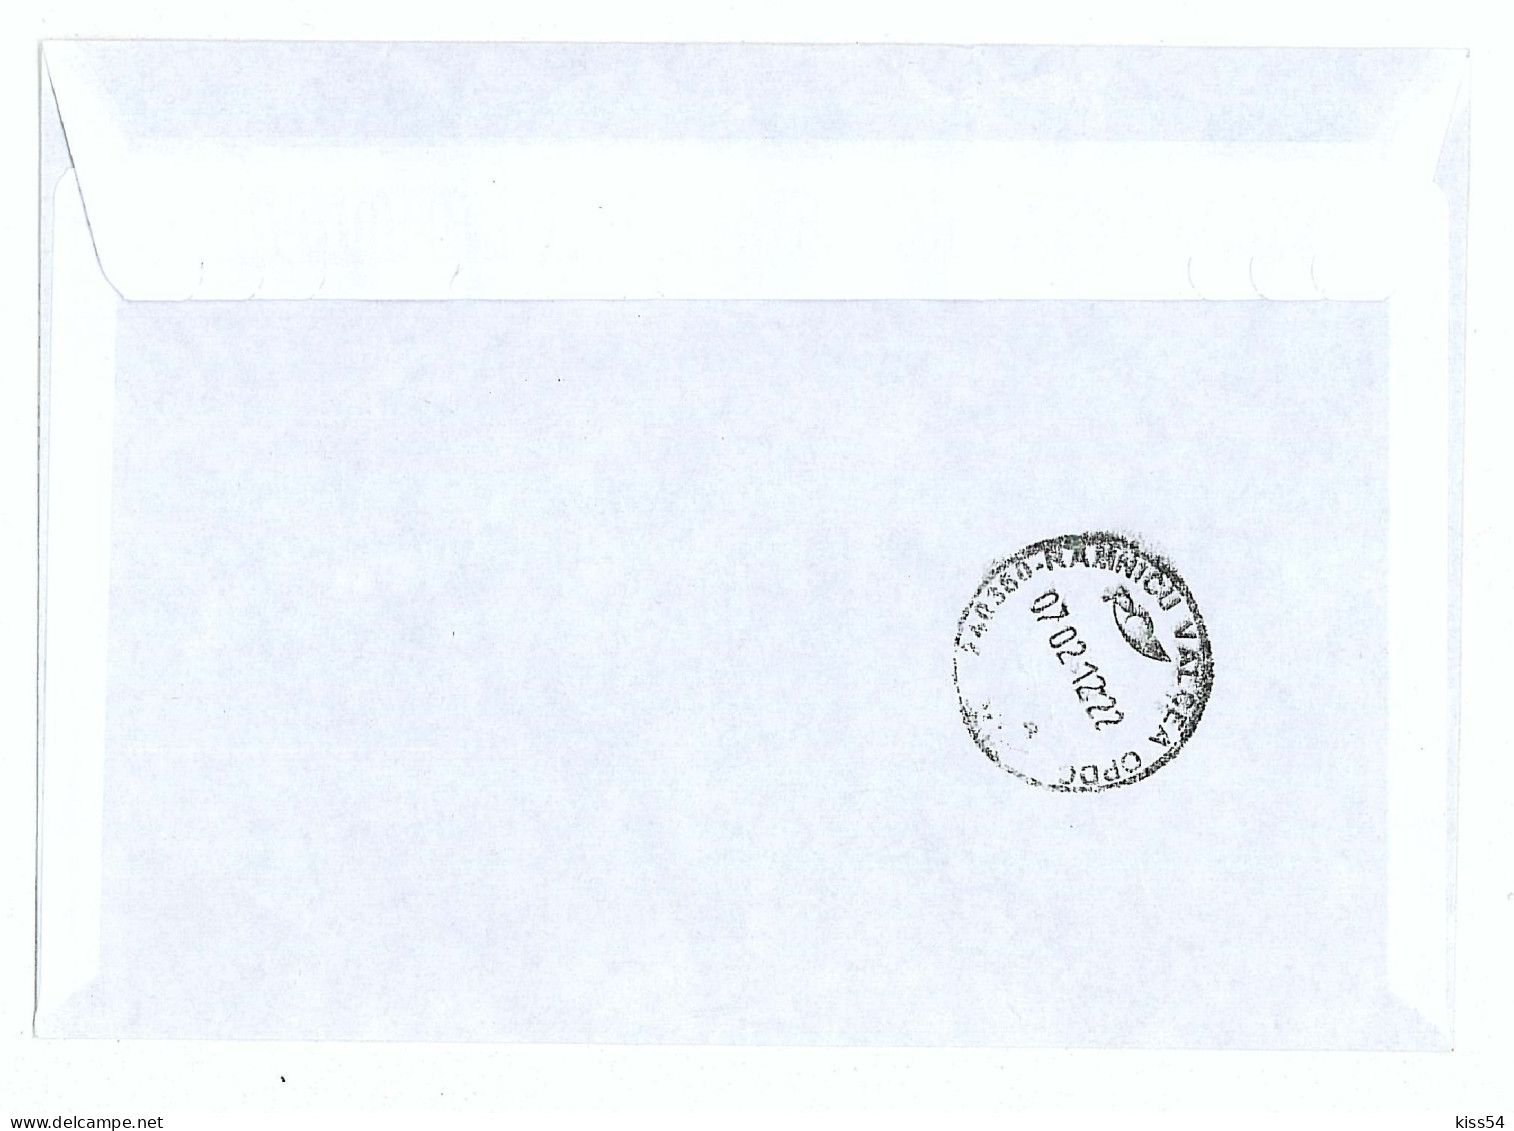 NCP 25 - 4113-a Comic THEATRE Caragiale, Romania - Registered, Stamp With Vignette - 2012 - Brieven En Documenten